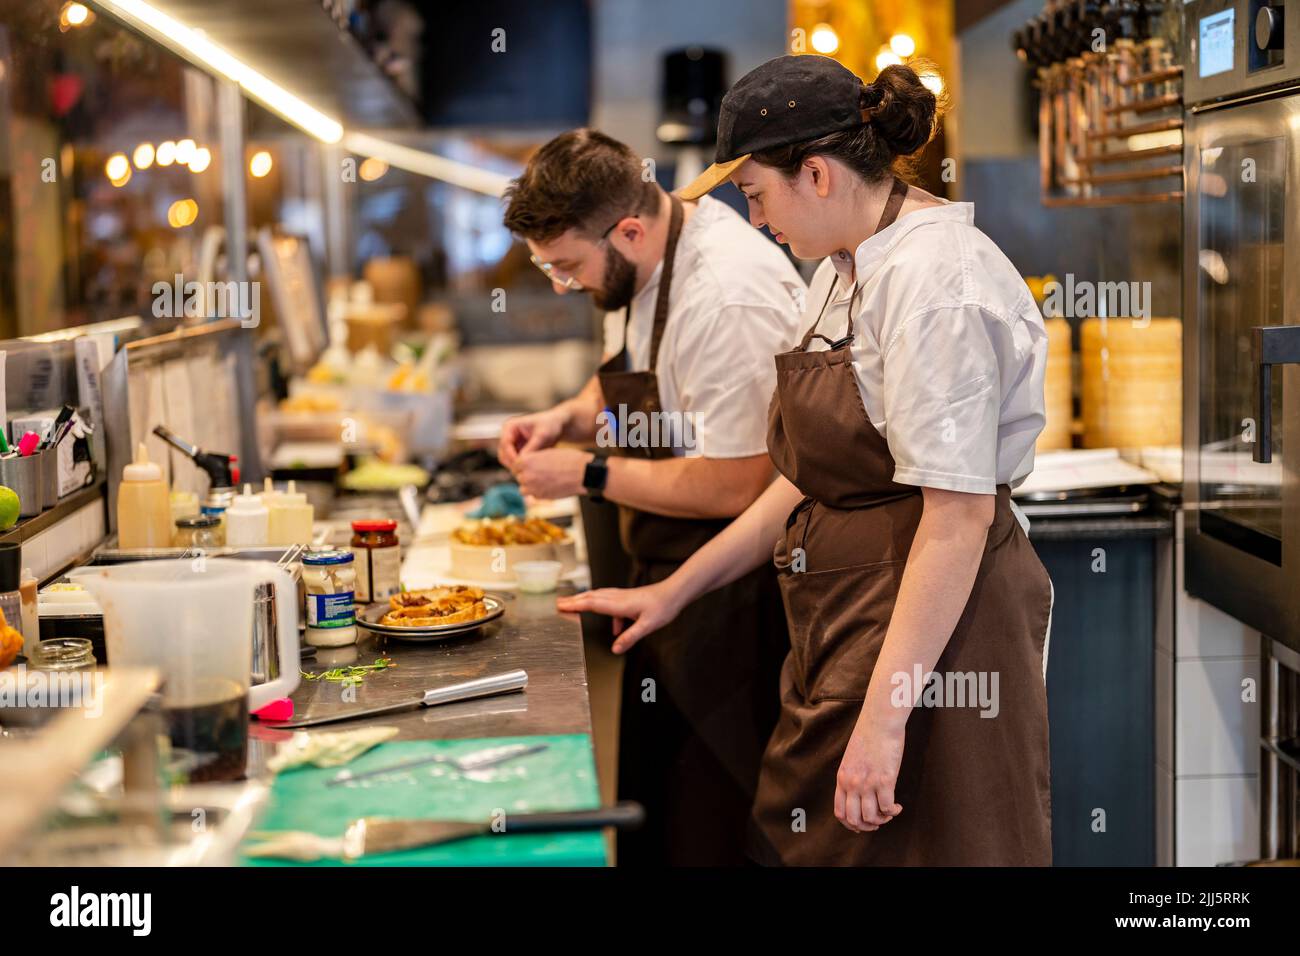 Chefs preparing food standing at restaurant kitchen Stock Photo